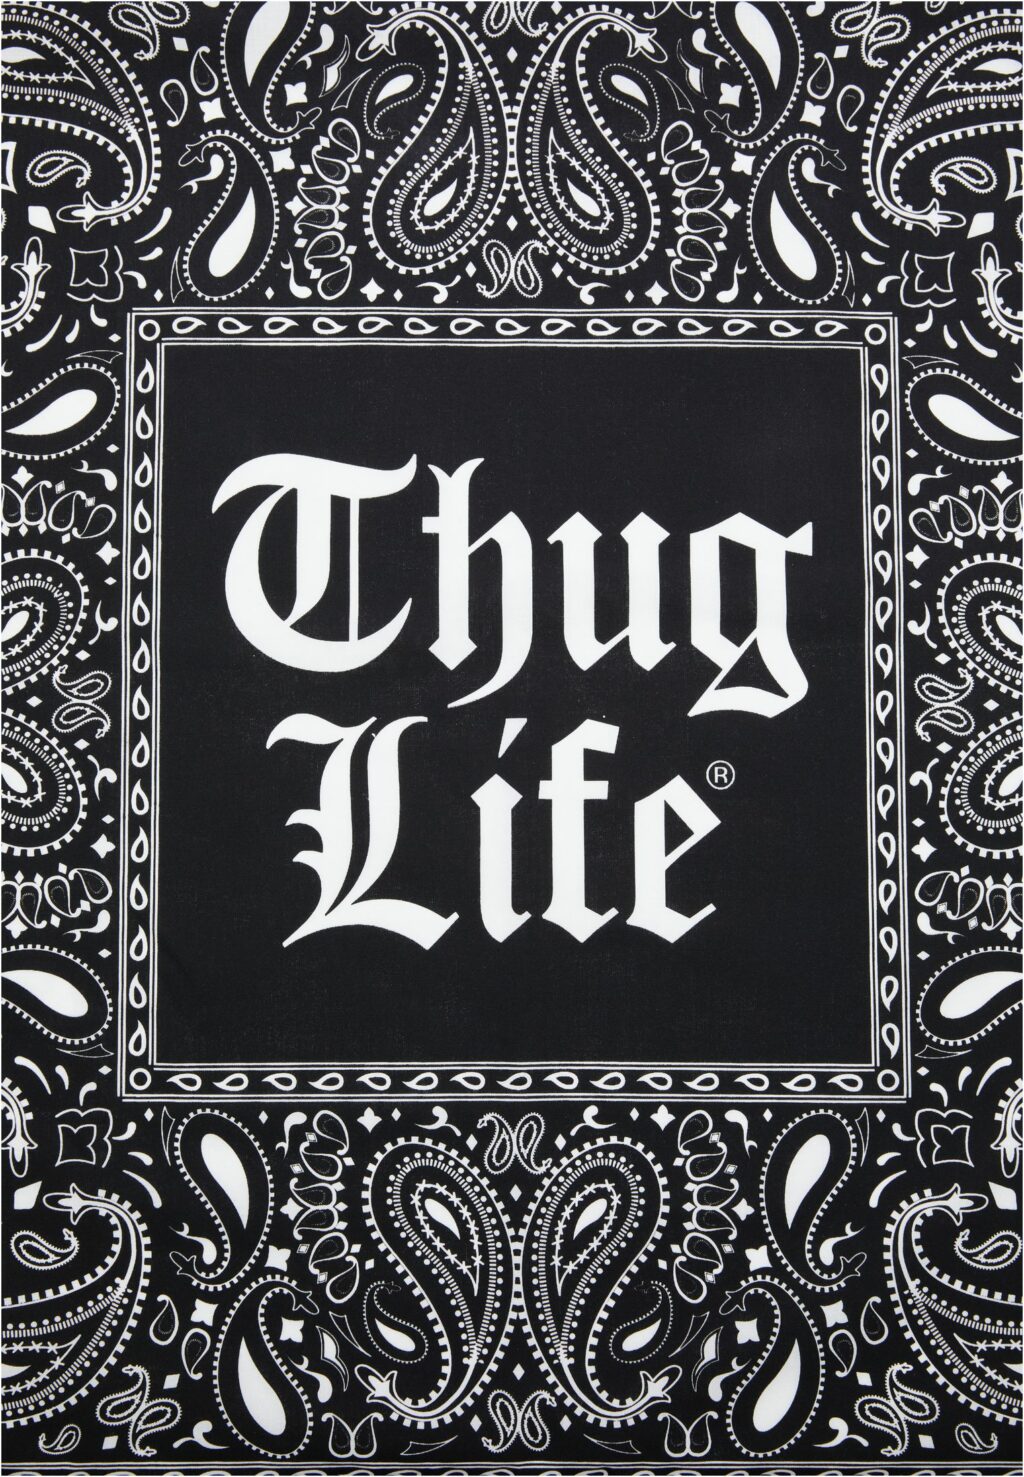 Thug Life Bandana Overthink black one TLACC100